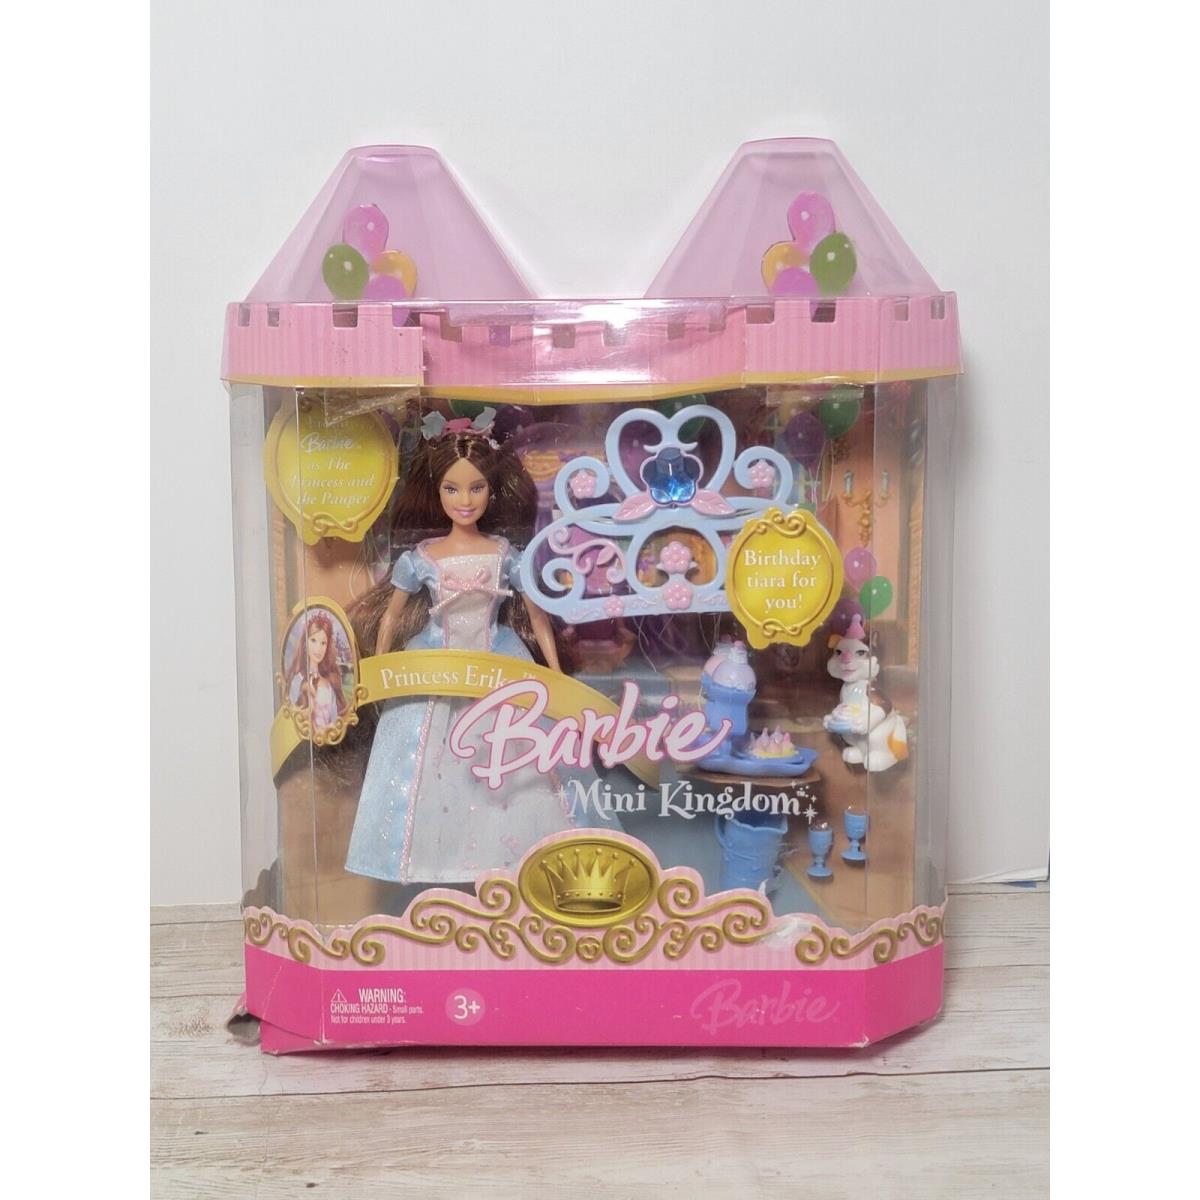 Barbie Mini Kingdom Princess Erika From Princess Pauper Cat Tiara Birthday